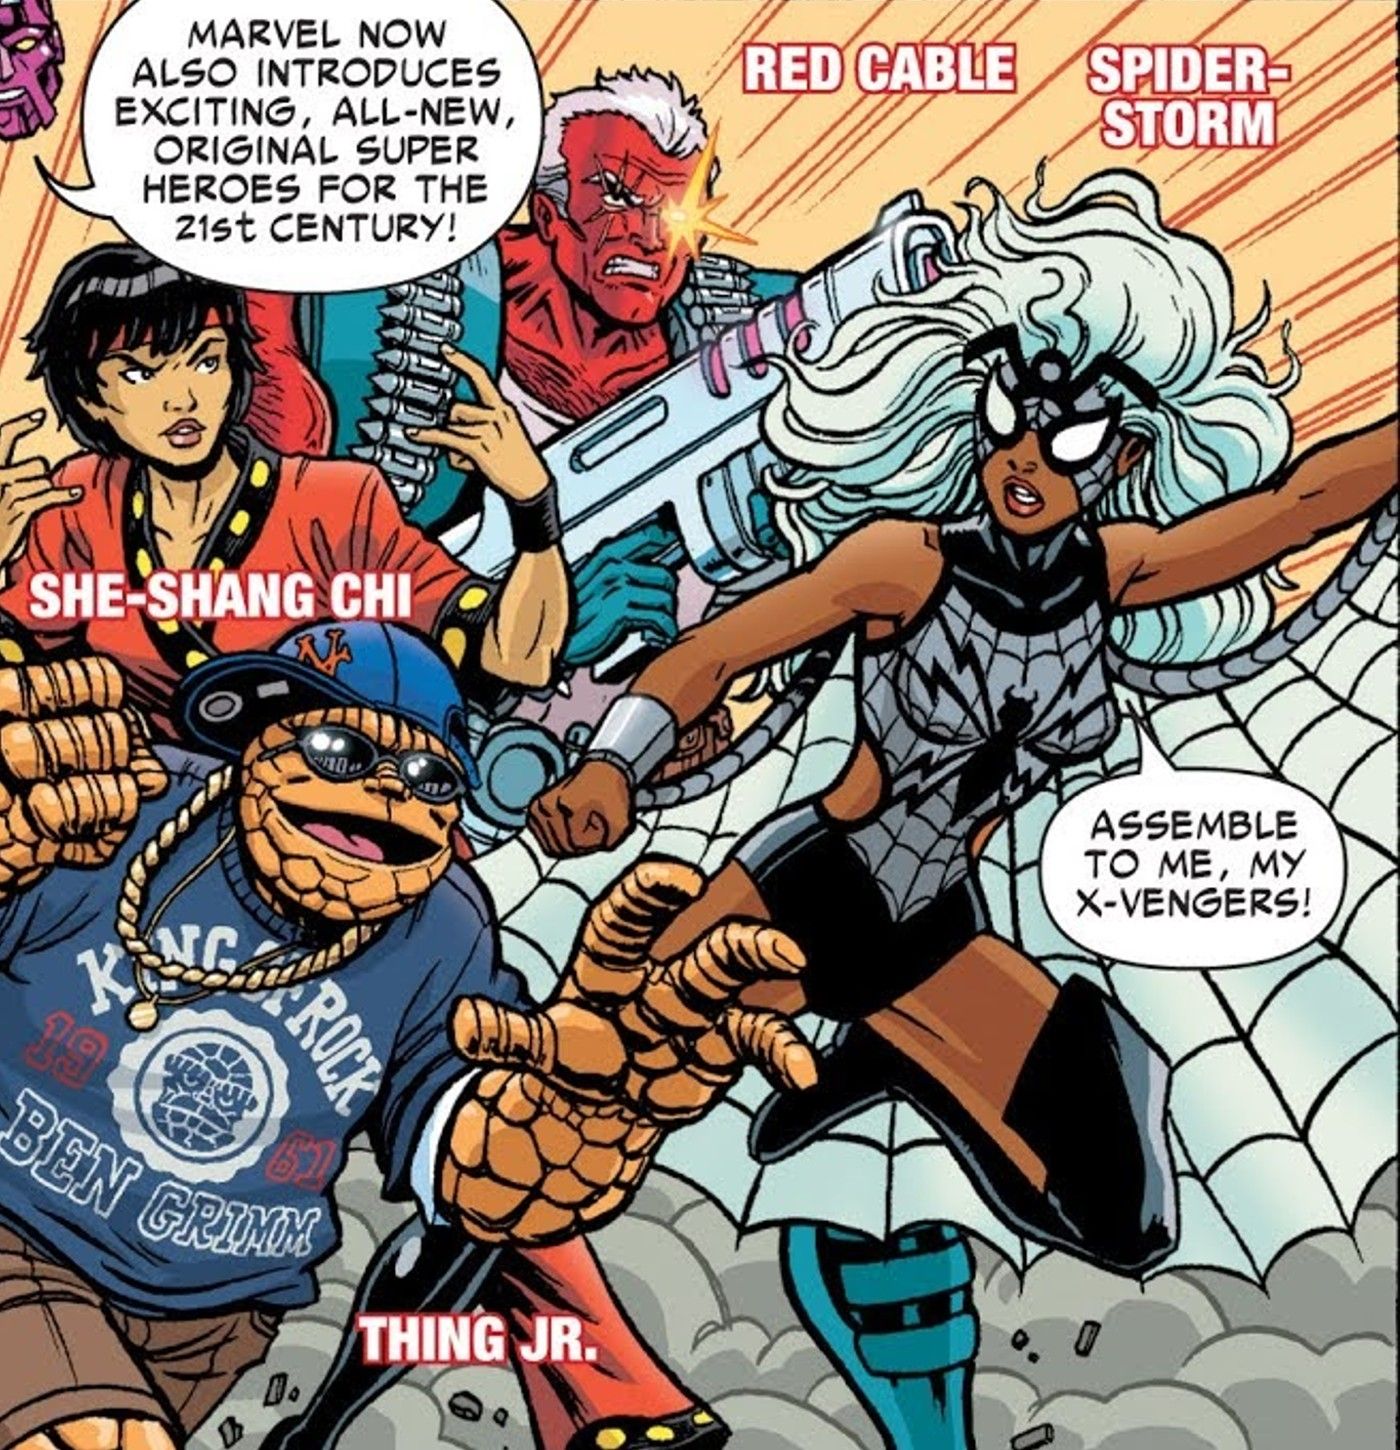 X-Vengers Marvel Storm Spider-Man